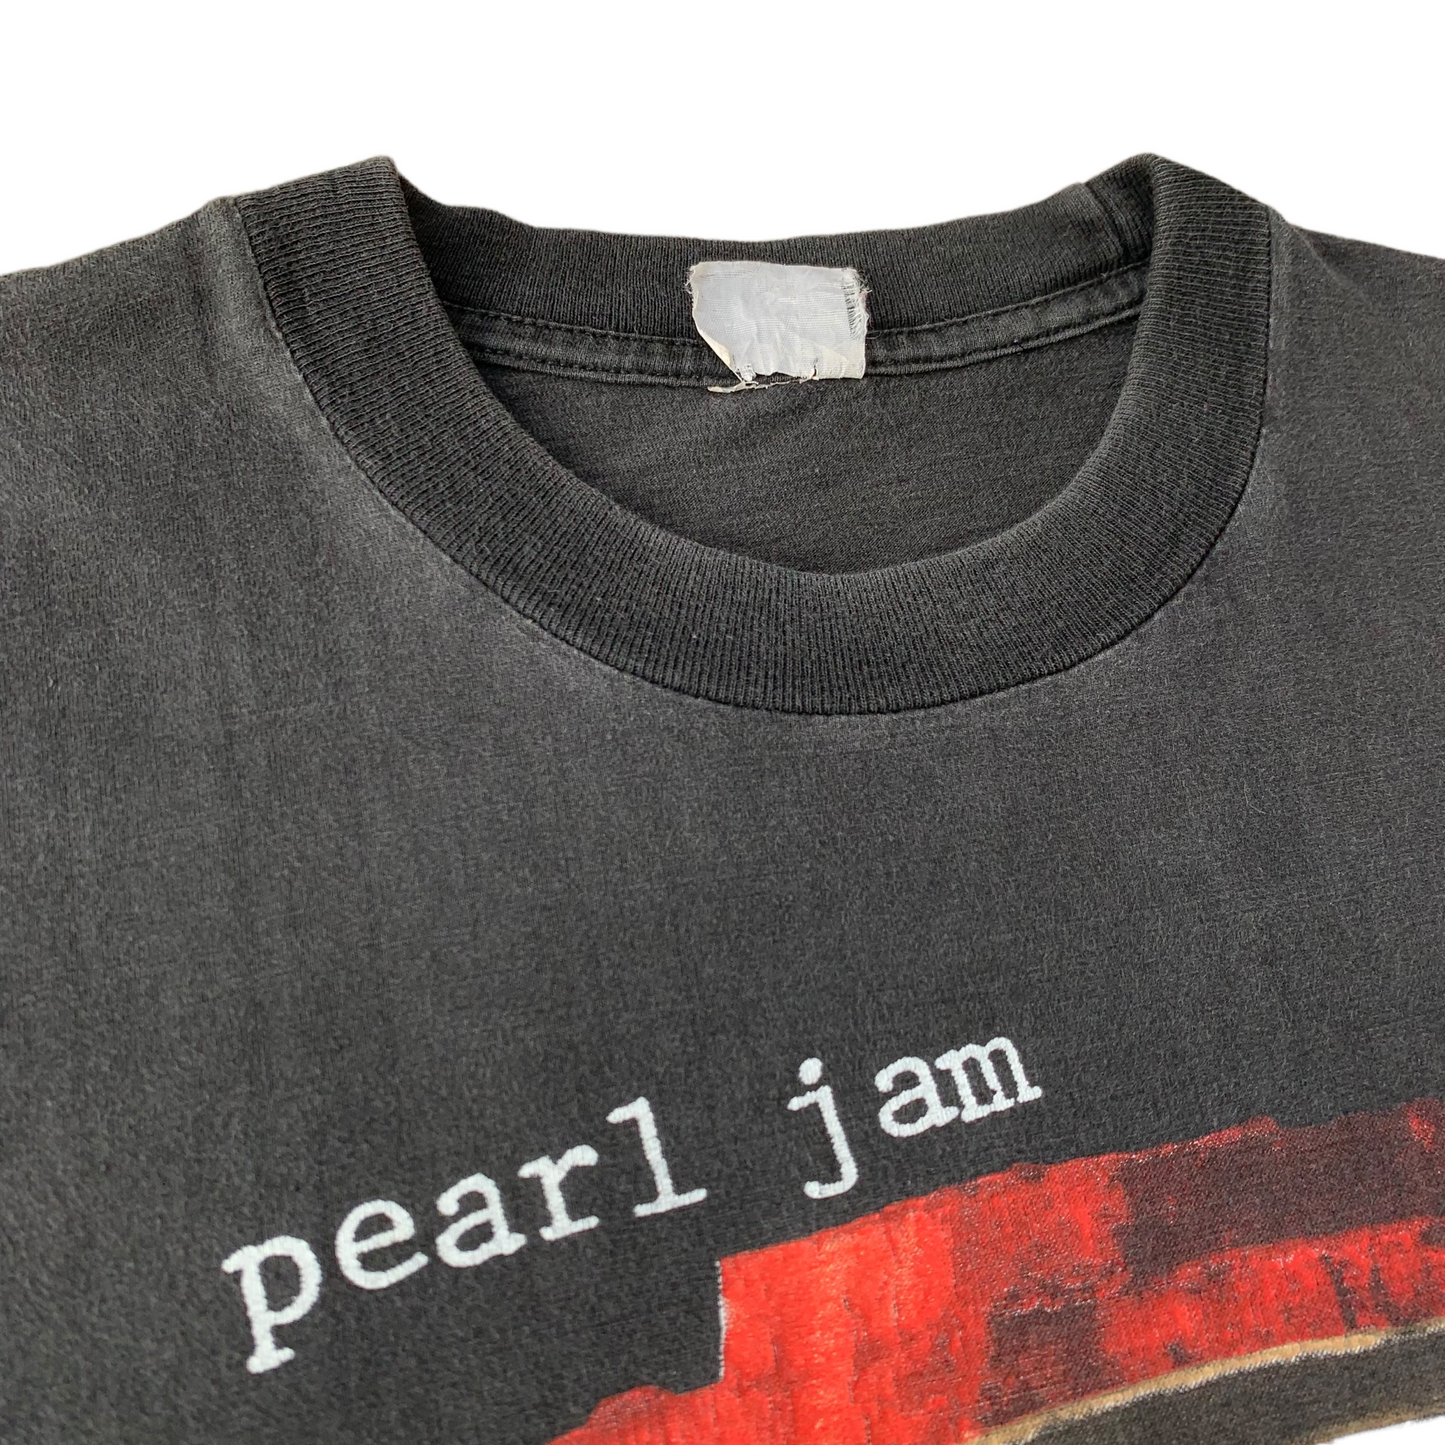 1993 Pearl Jam ‘Windowpane’ (XL)